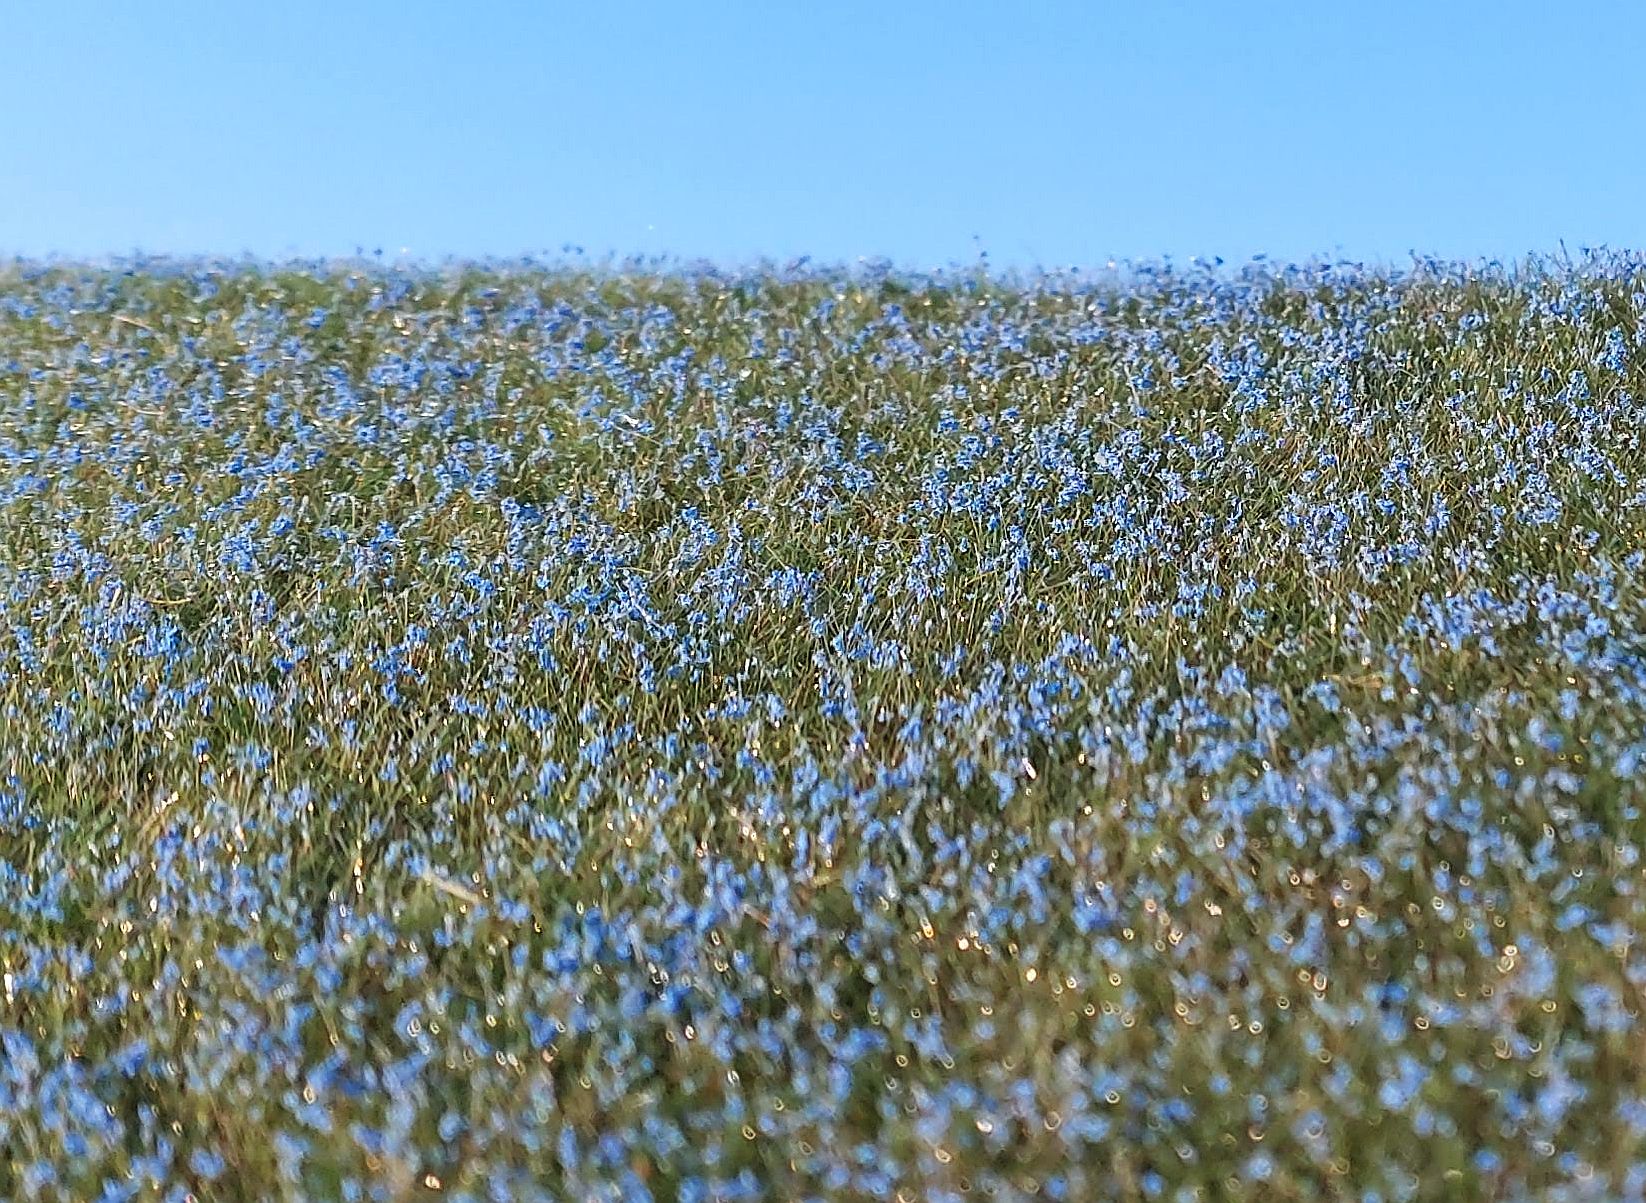 Blooming Flax field